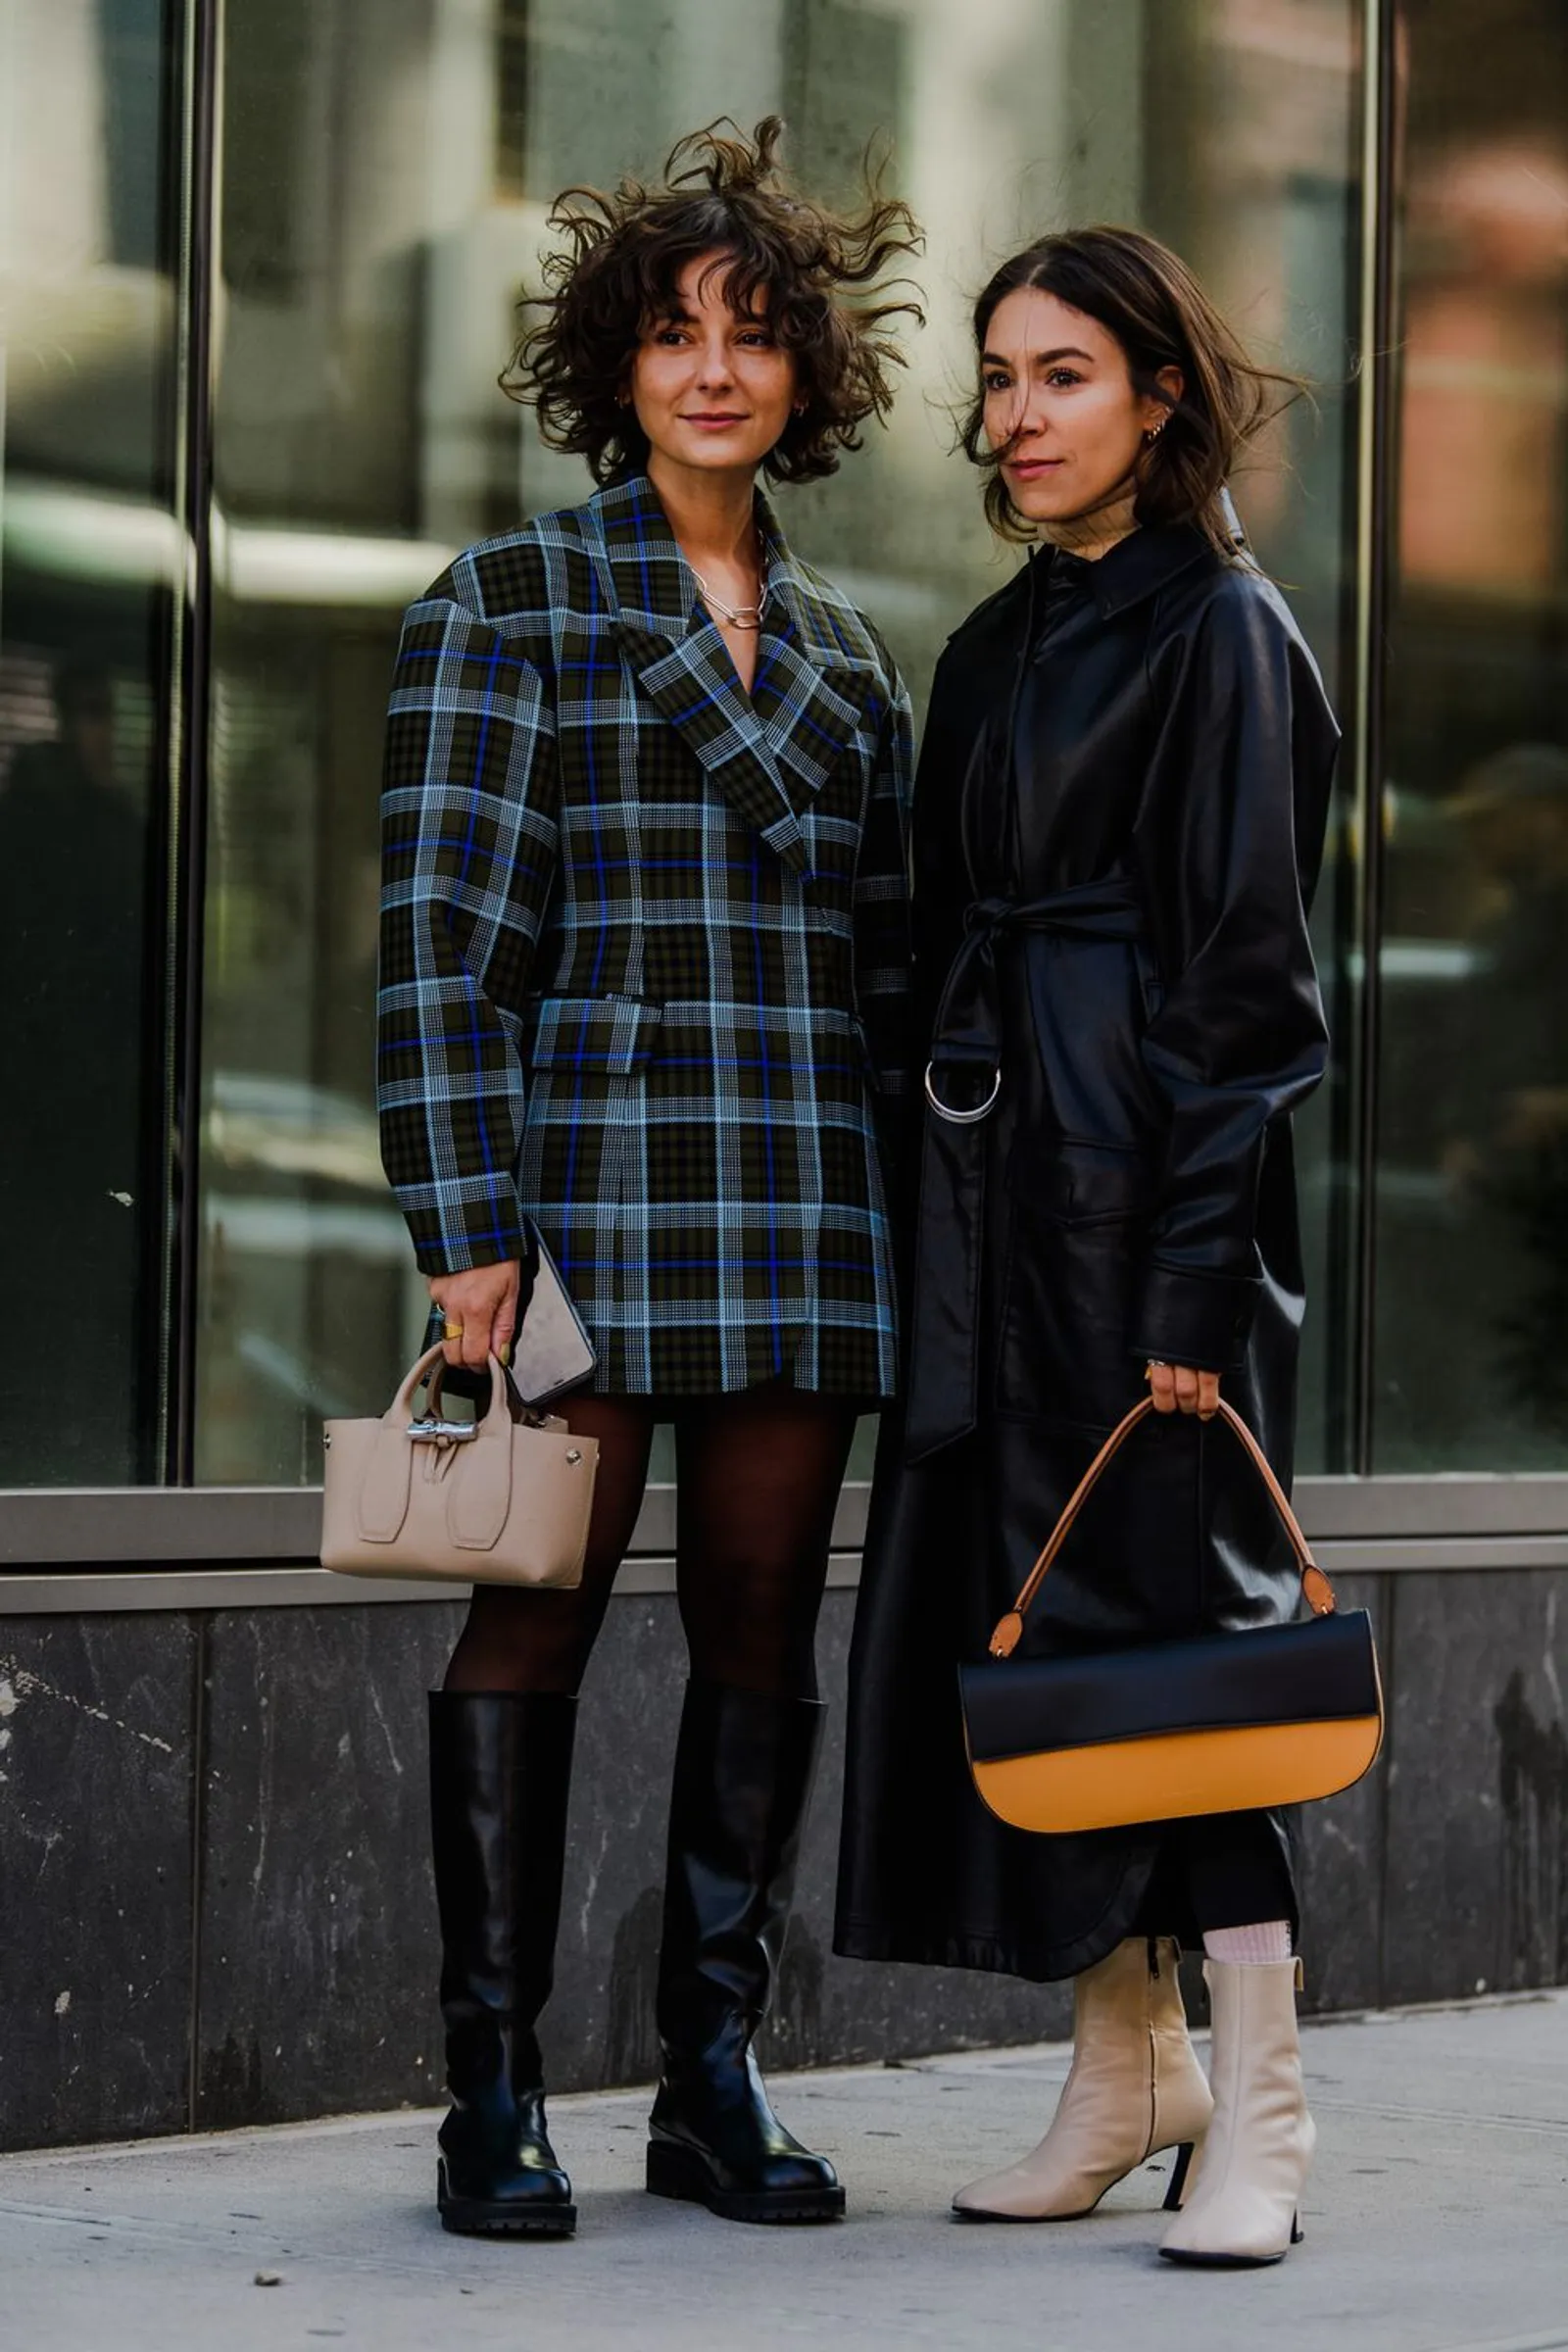 Leather Outfit jadi Trend di New York Fashion Week 2020, Berani Coba?